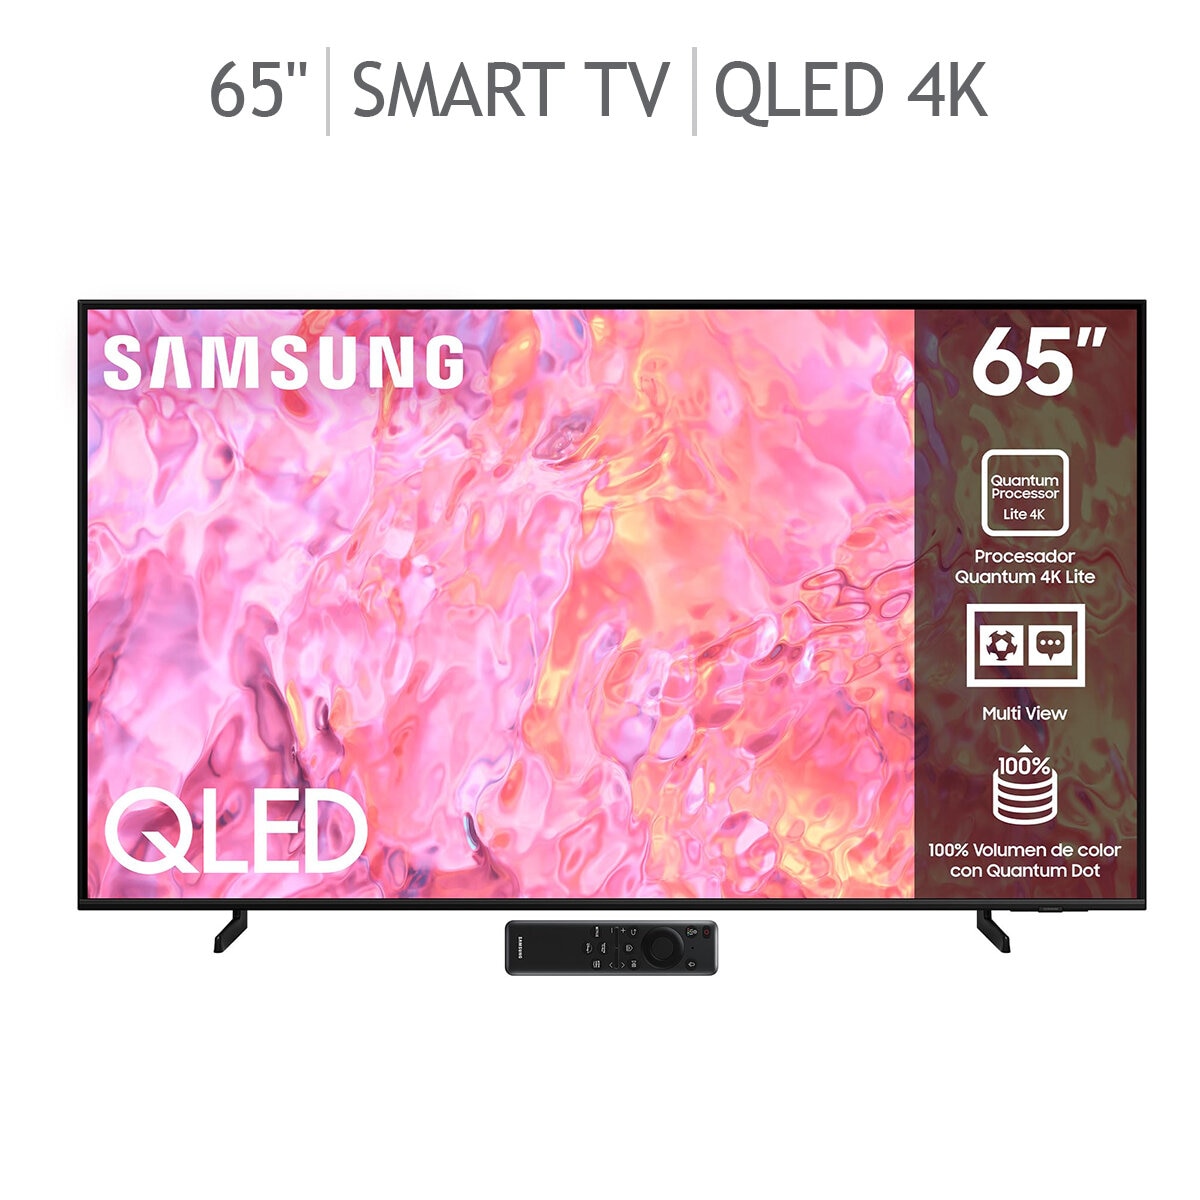 Televisor Samsung 65 pulgadas OLED 4K HDR Smart TV SAMSUNG